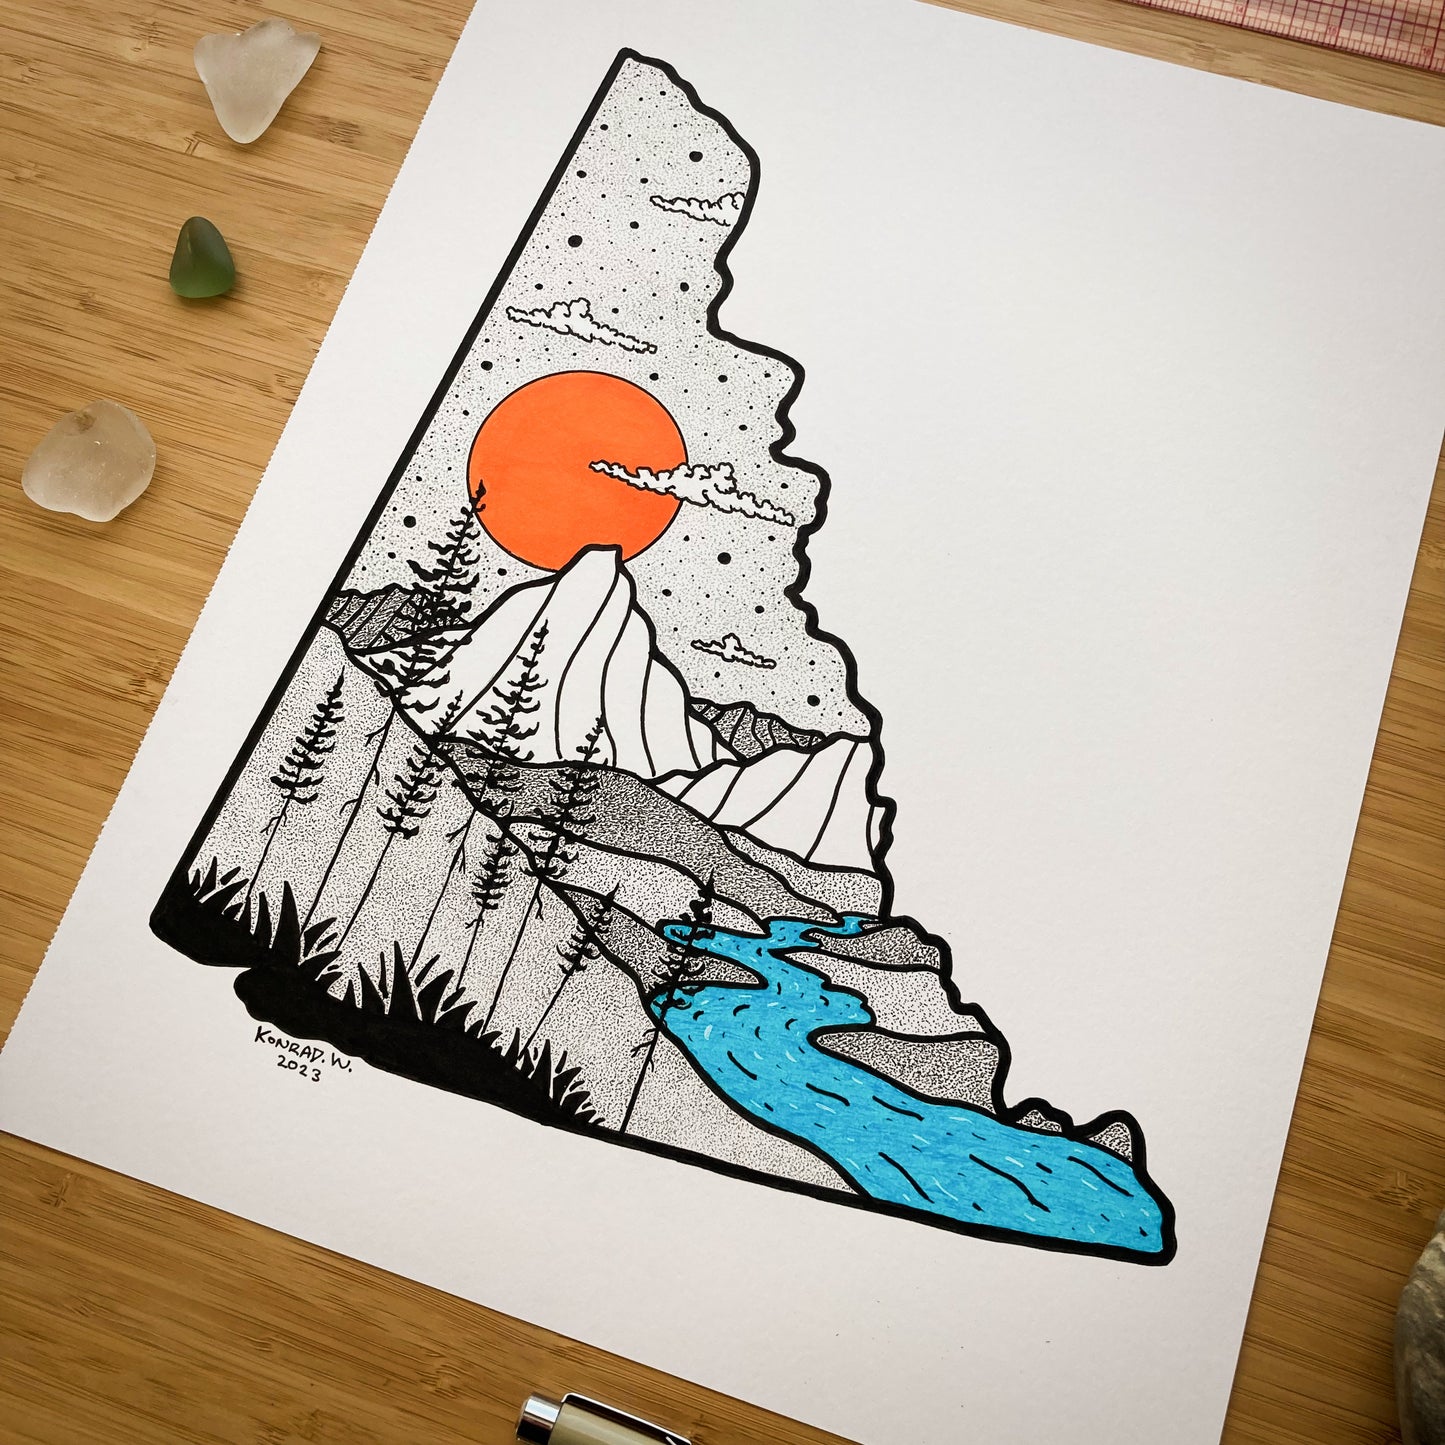 The Yukon Territory - 11x14 ORIGINAL Pen and Ink Illustration